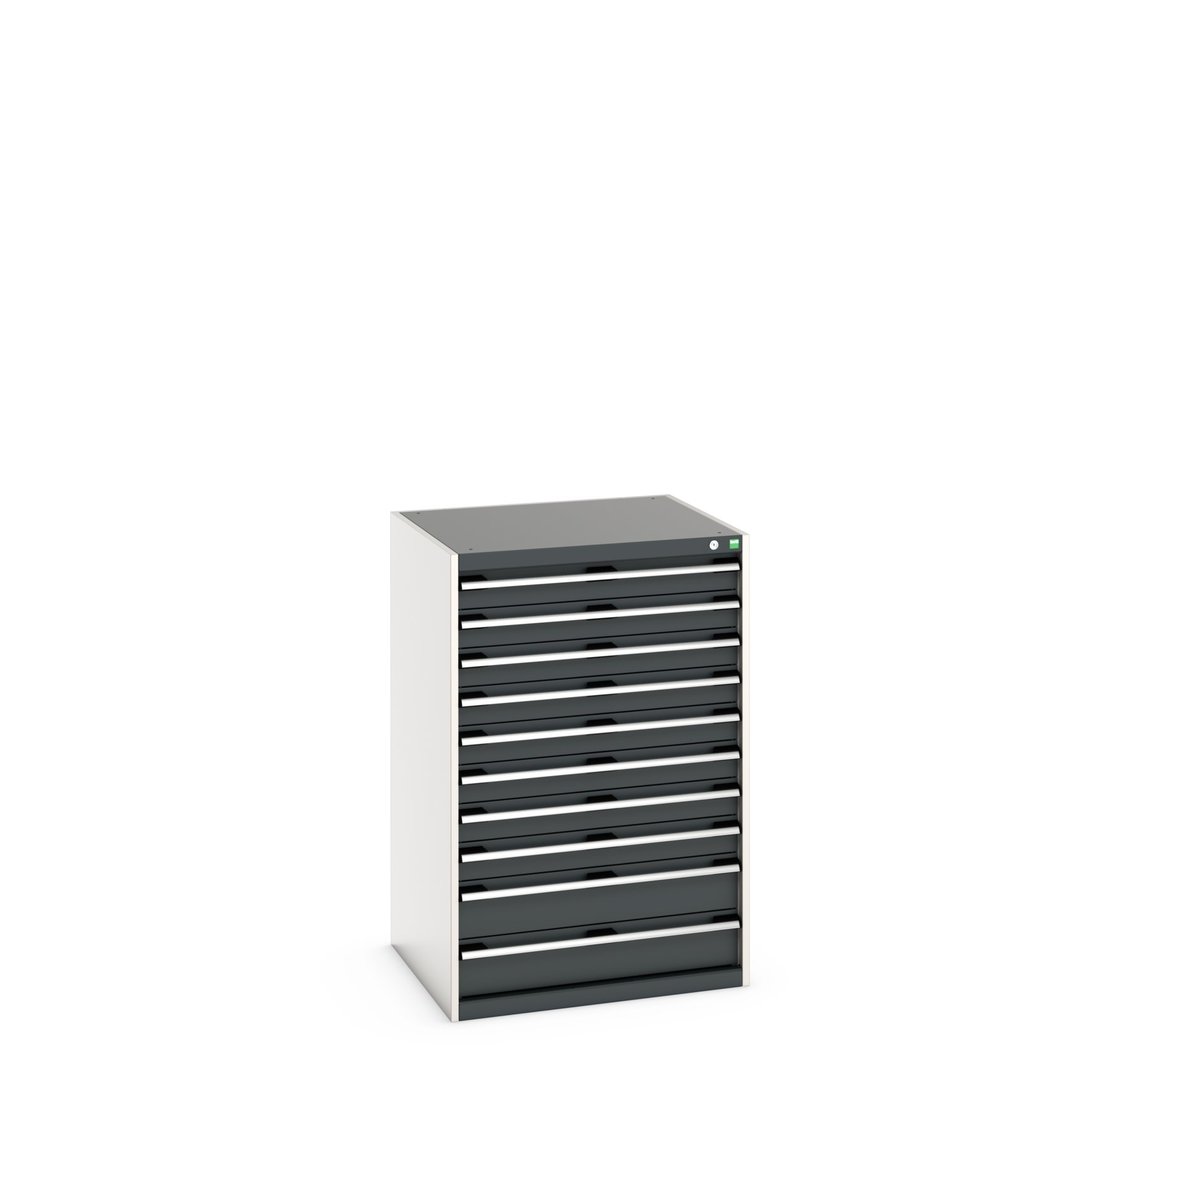 40028038. - cubio drawer cabinet 